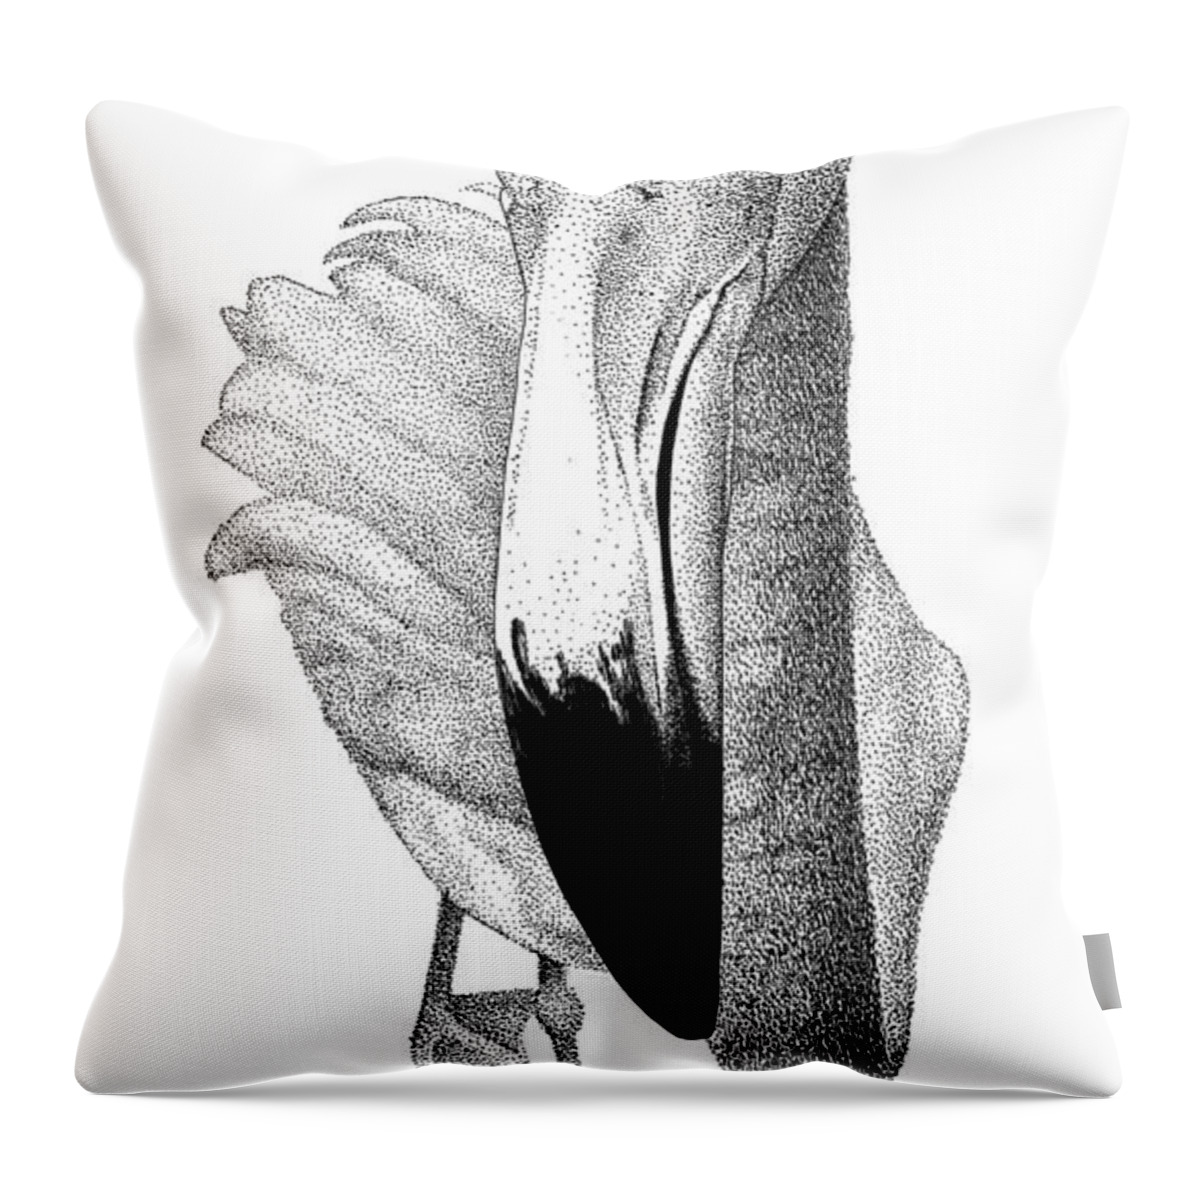 Flamingo Throw Pillow featuring the drawing Flamingo by Scott Woyak